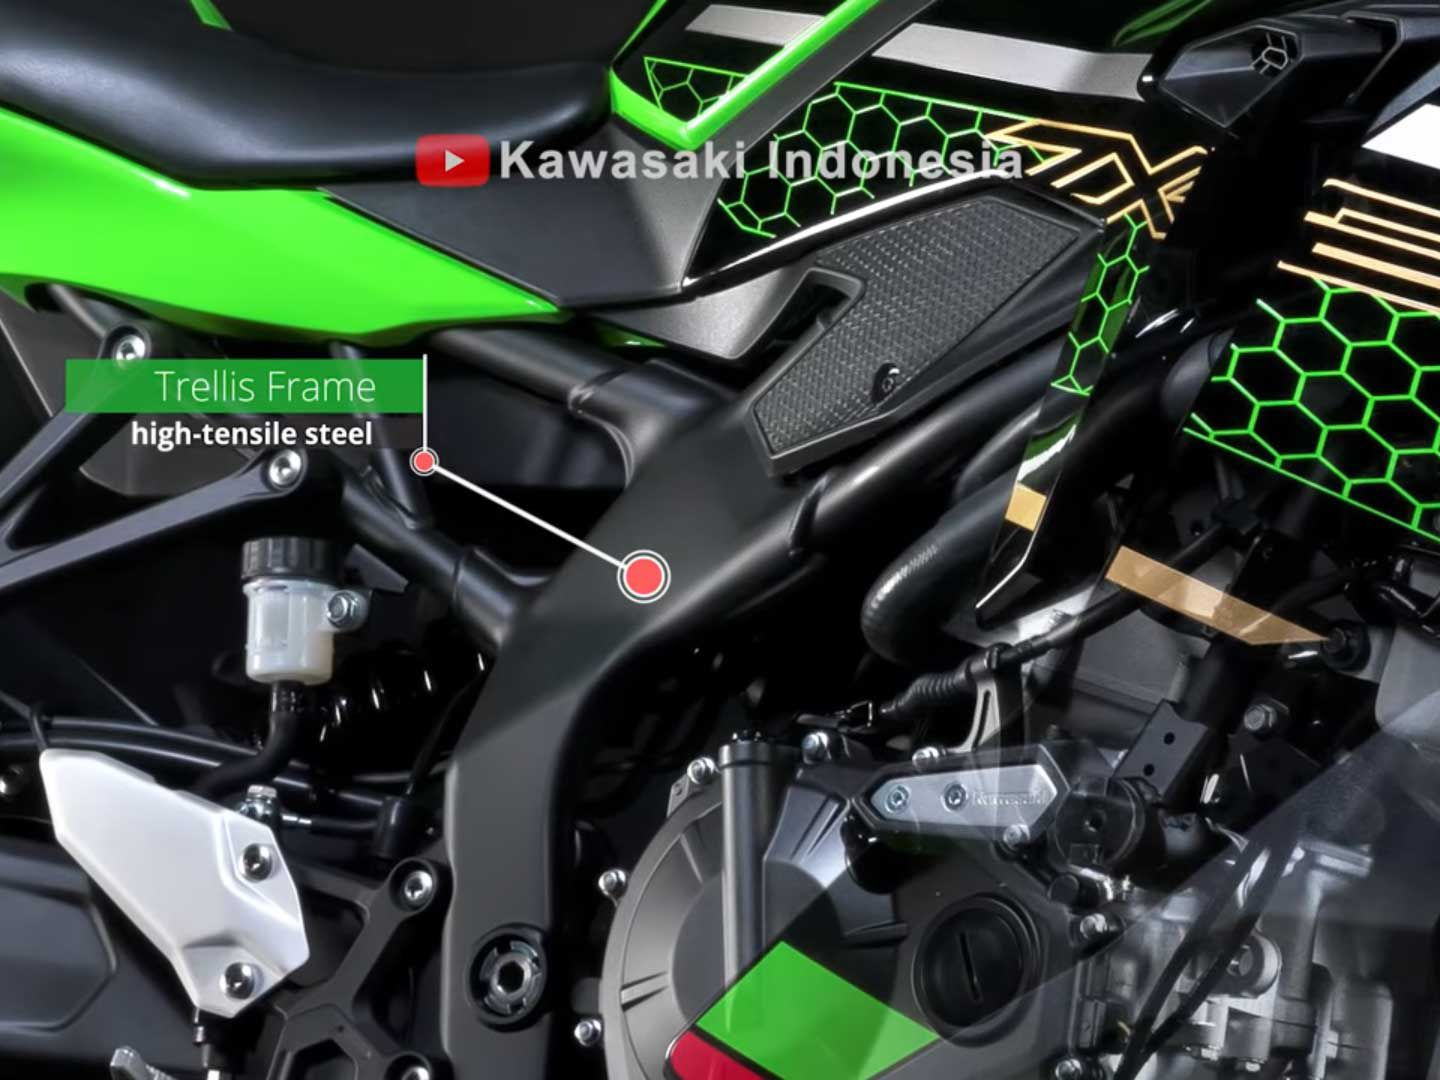 2020 Kawasaki Ninja ZX-25R Preview | Motorcyclist